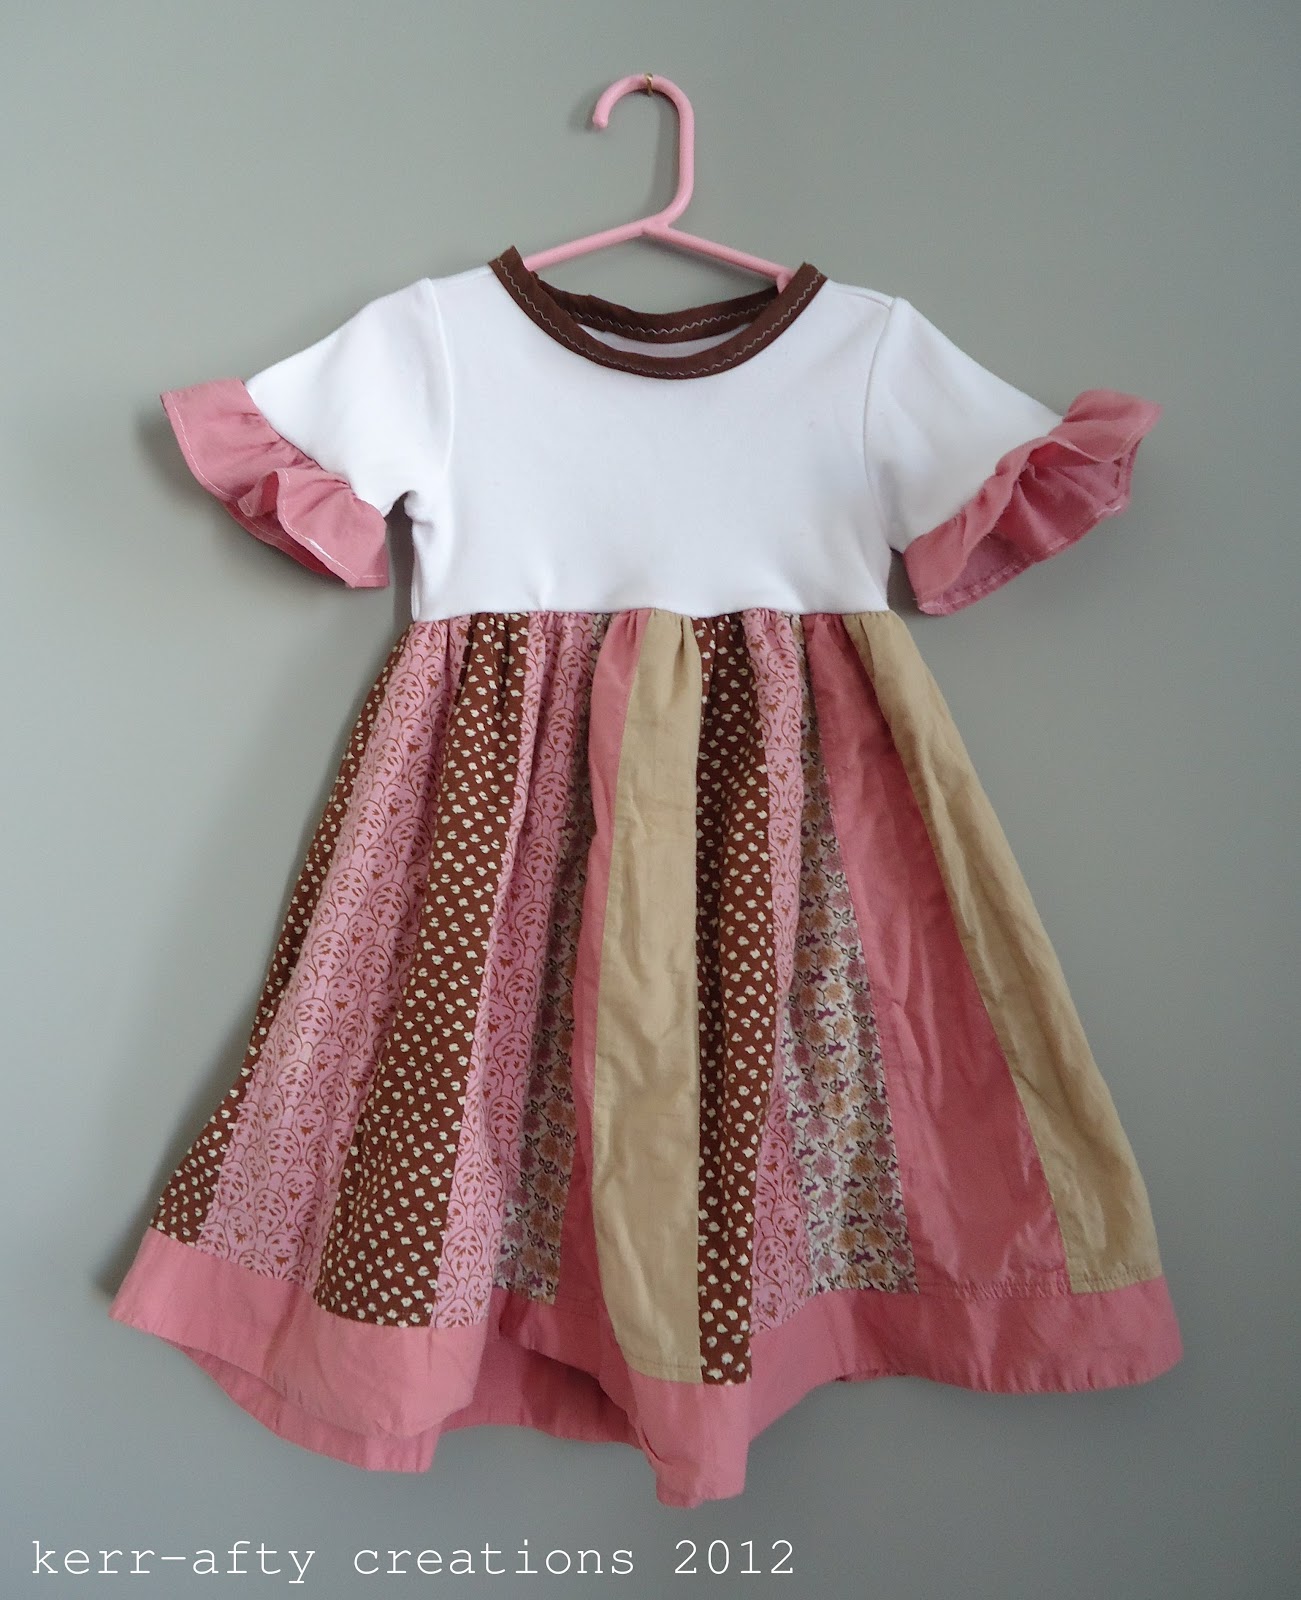 Kerr-afty Creations: A Shirt/Skirt Refashion